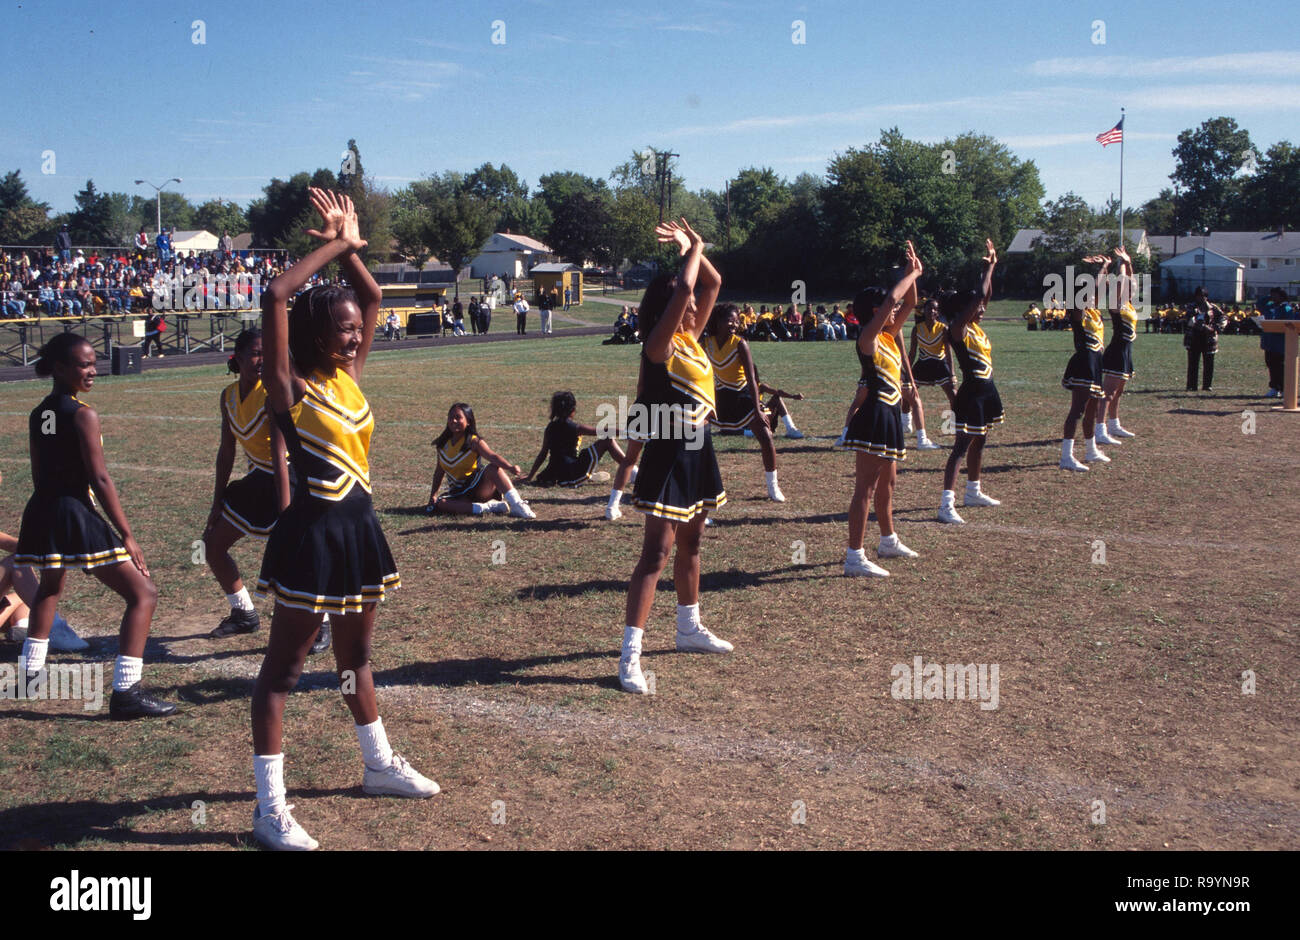 High school cheerleaders practing, sus movimientos l, Foto de stock